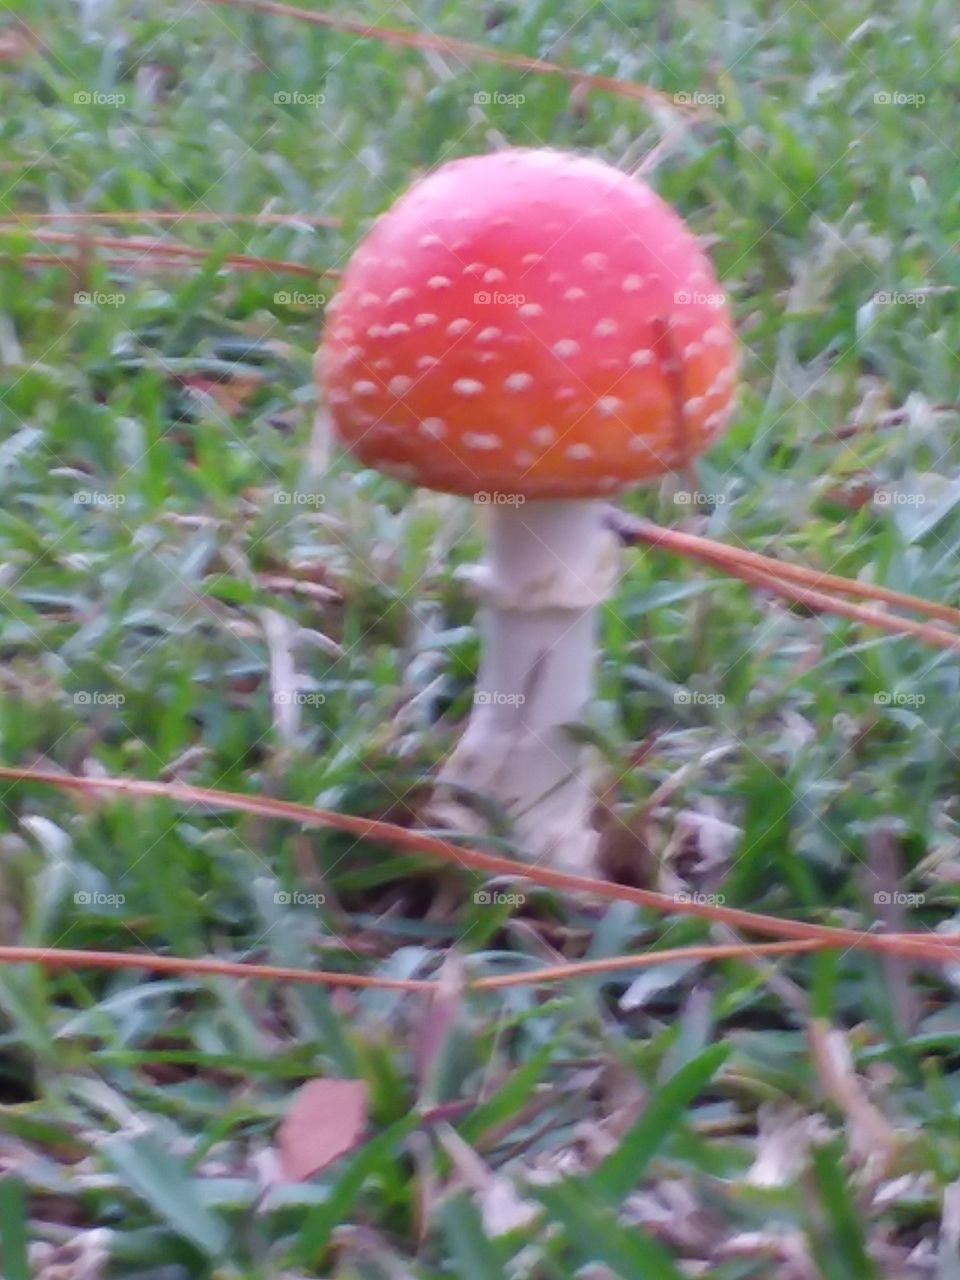 Tiny little mushroom growing all alone